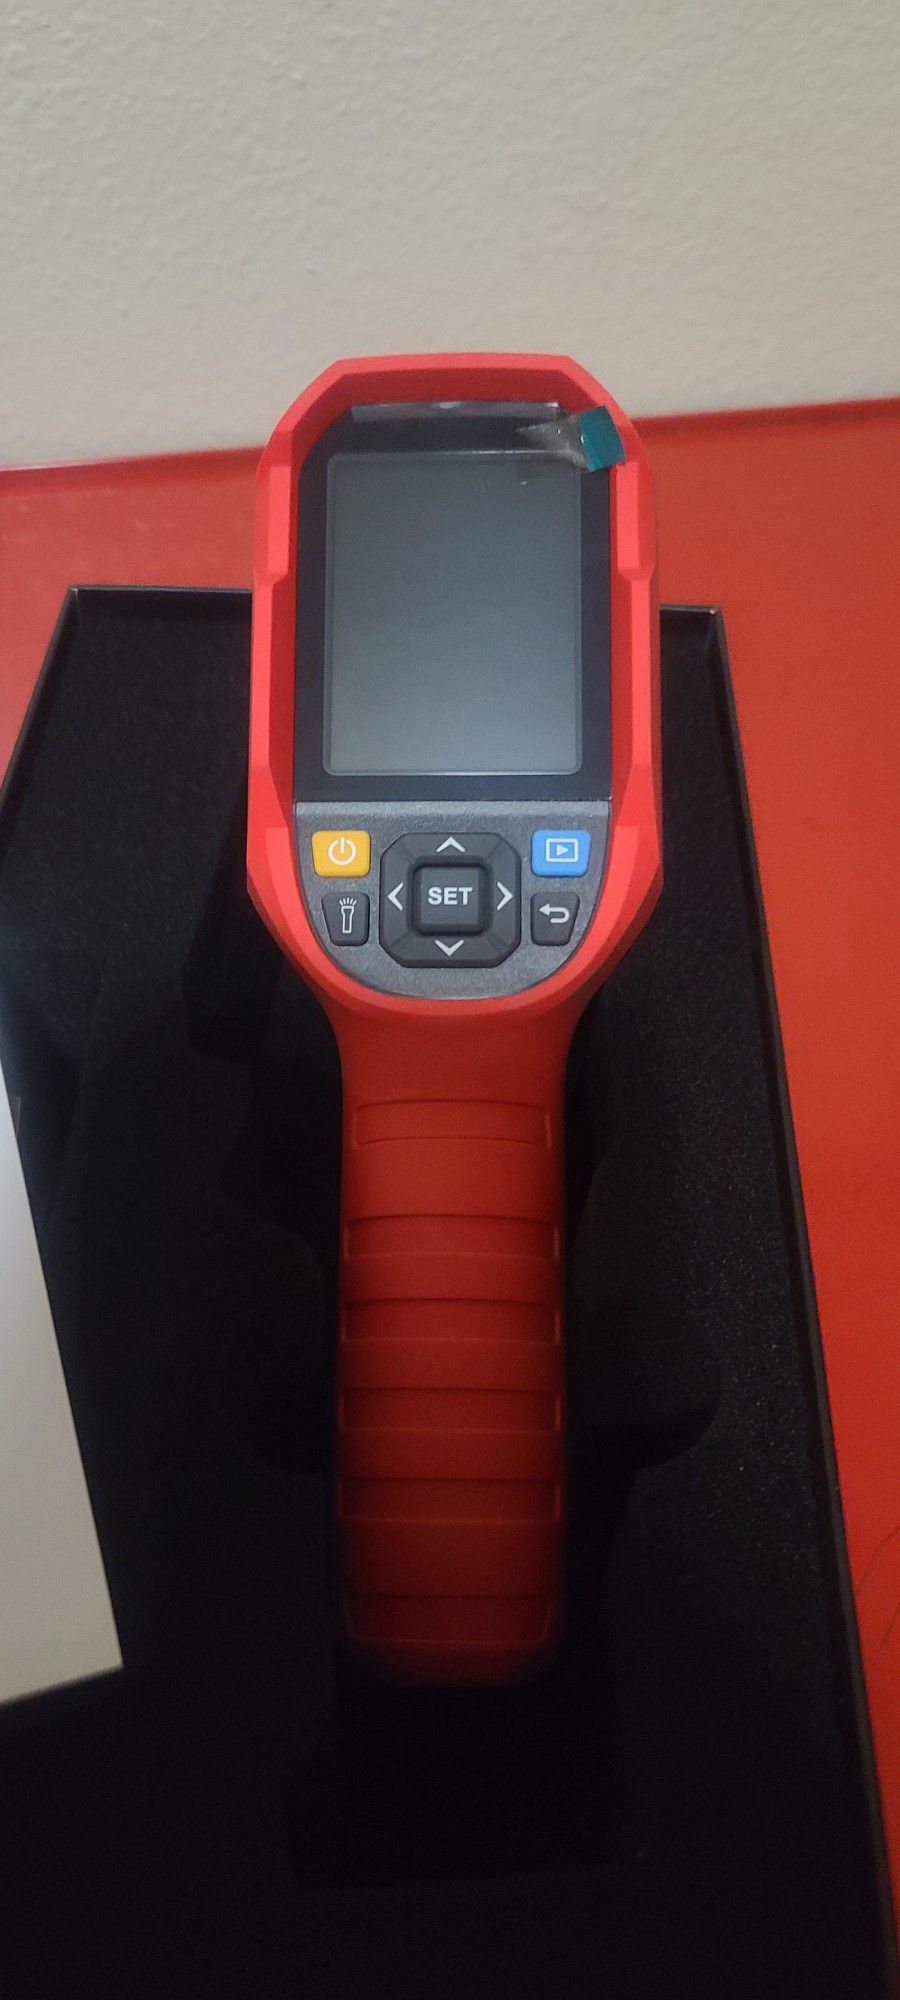 Uni-t thermal imager professional uti260b heat new